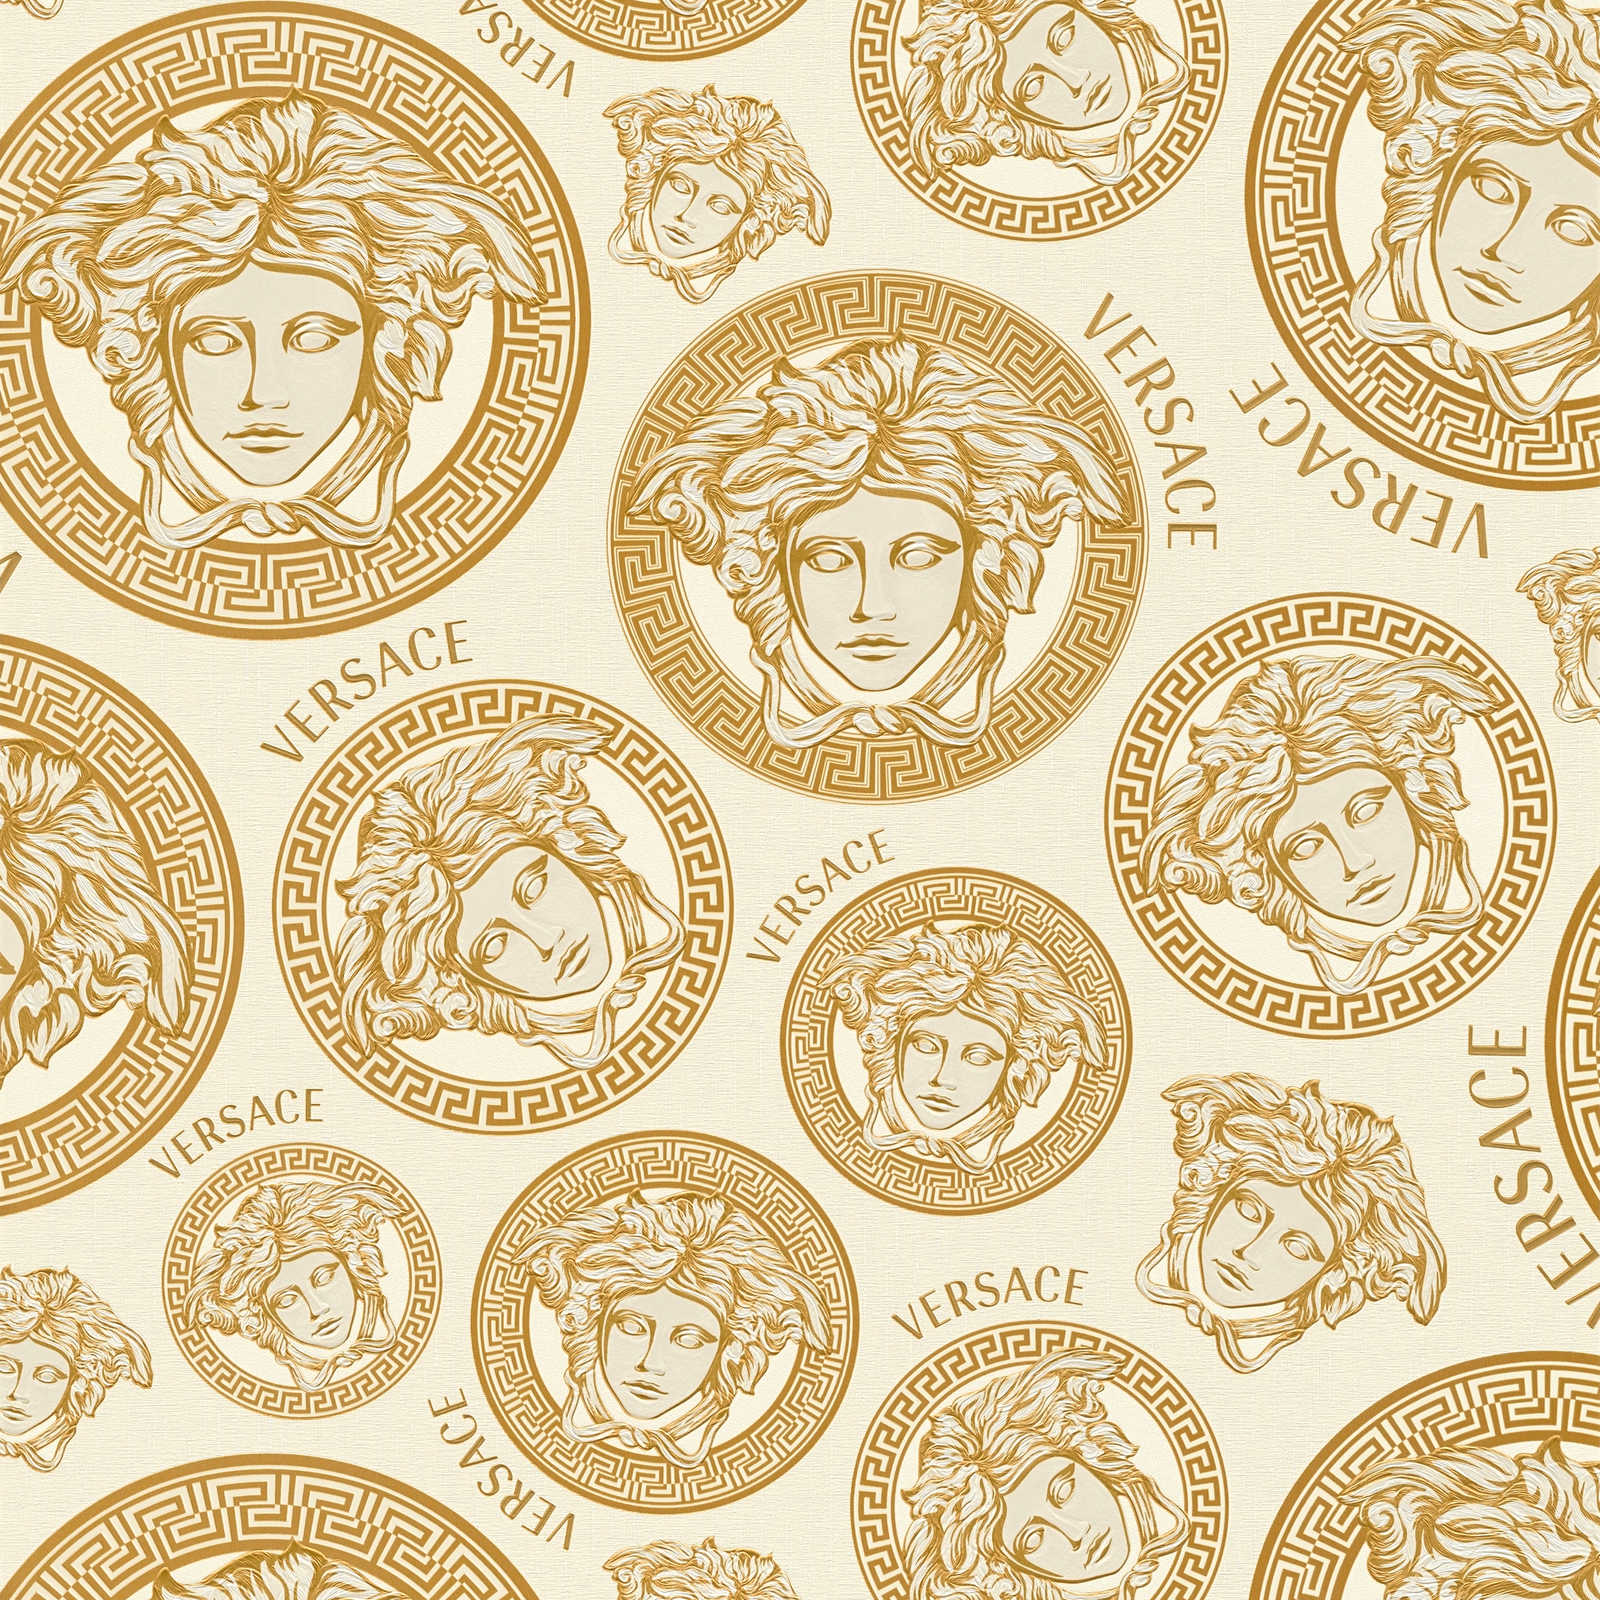         VERSACE wallpaper gold design with Medusa emblem - cream
    